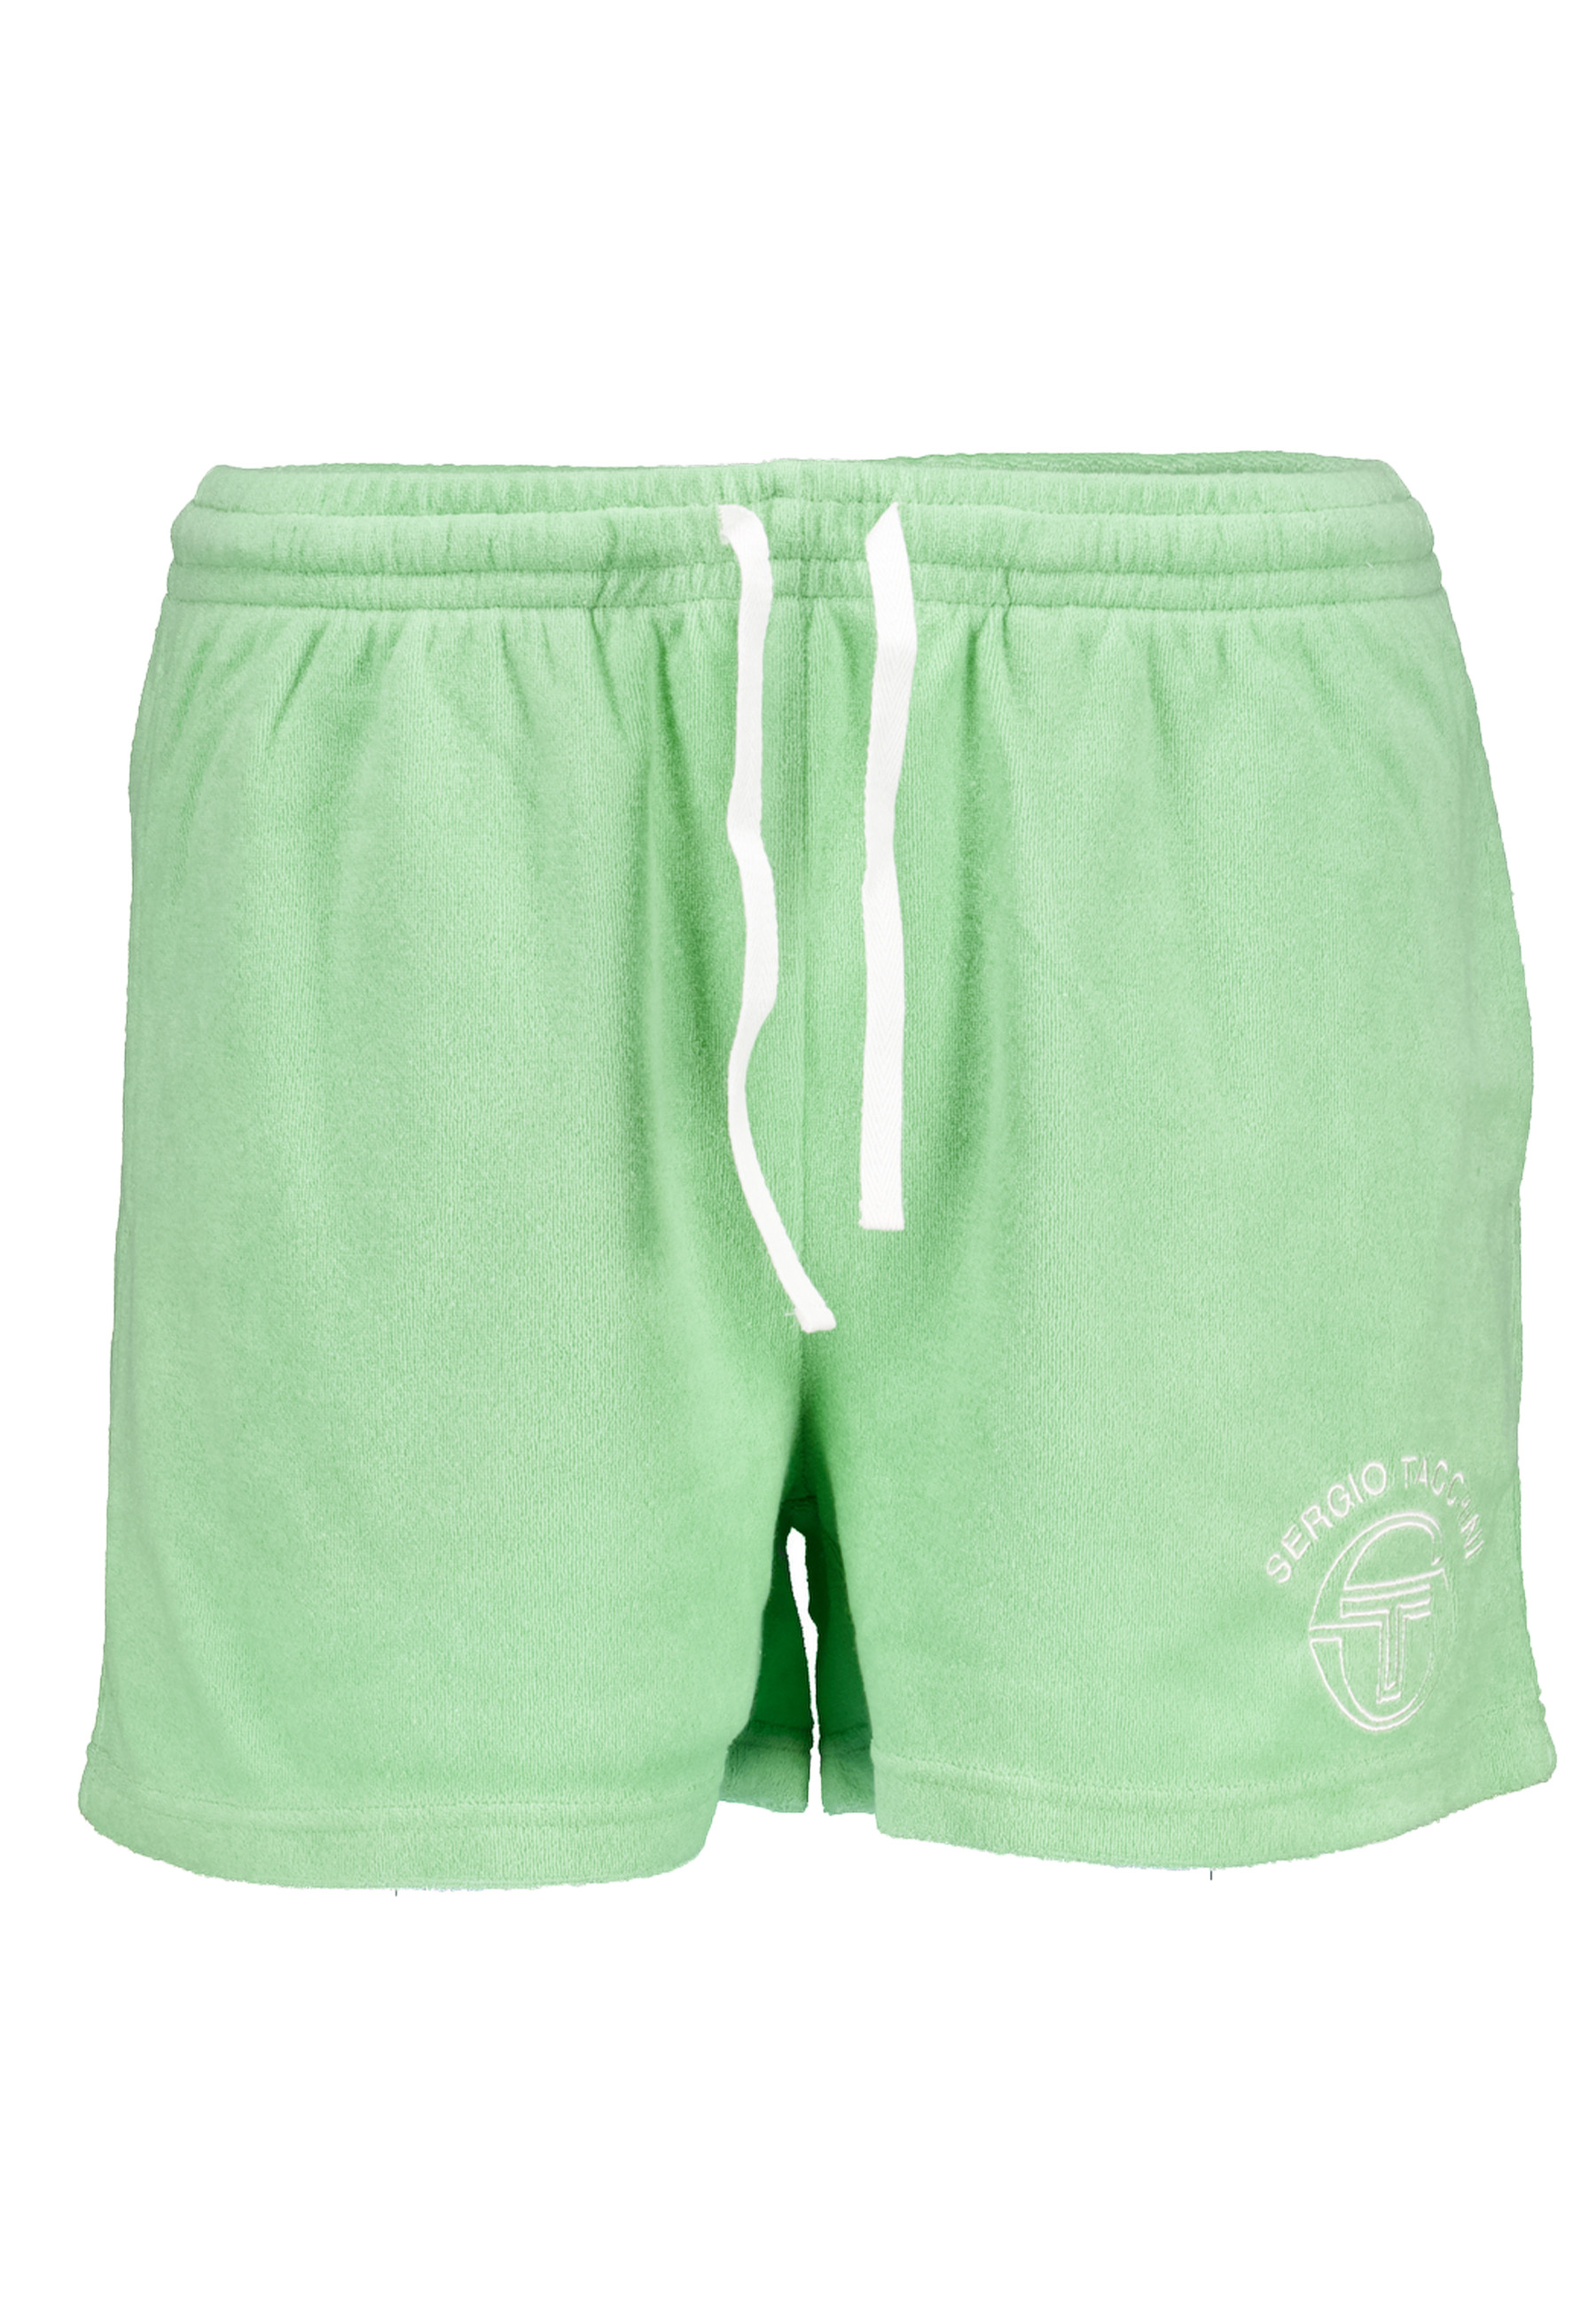 Sergio Tacchini Vettorio tennis shorts groen Heren maat XL